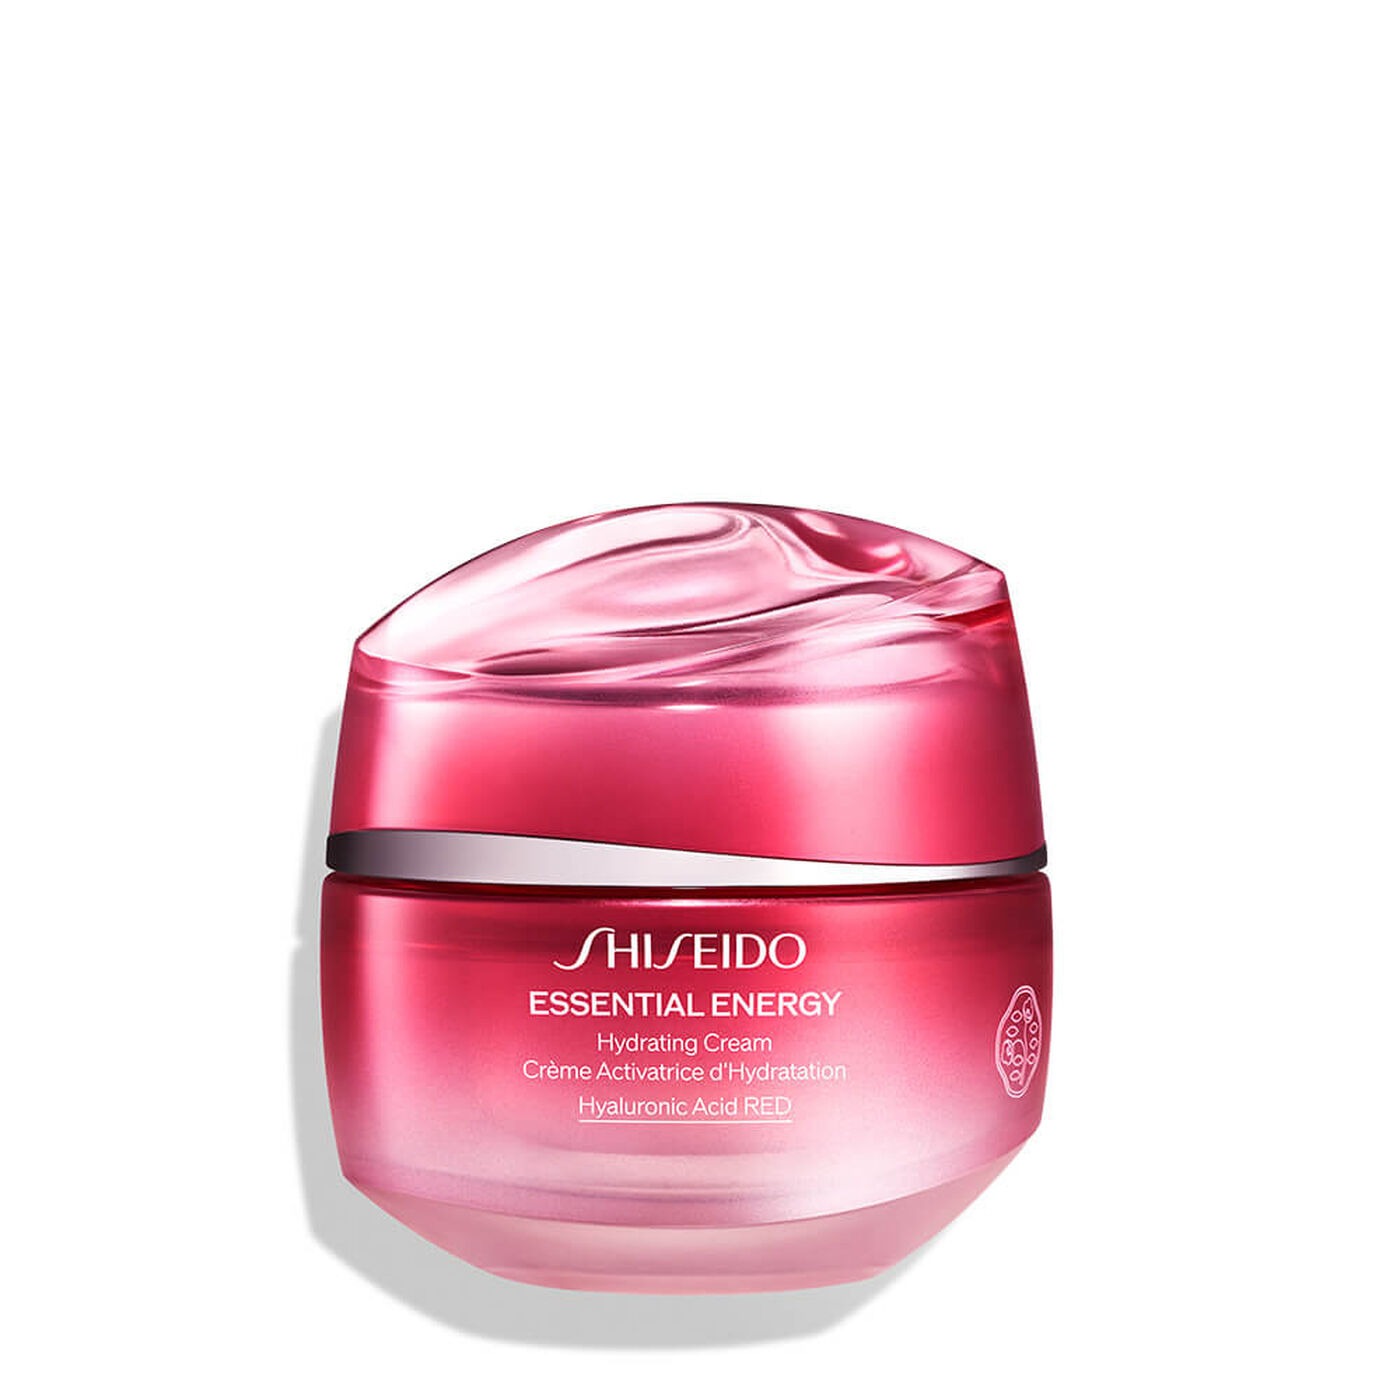 Kem dưỡng da Shiseido Essential Energy Hydrating Cream.